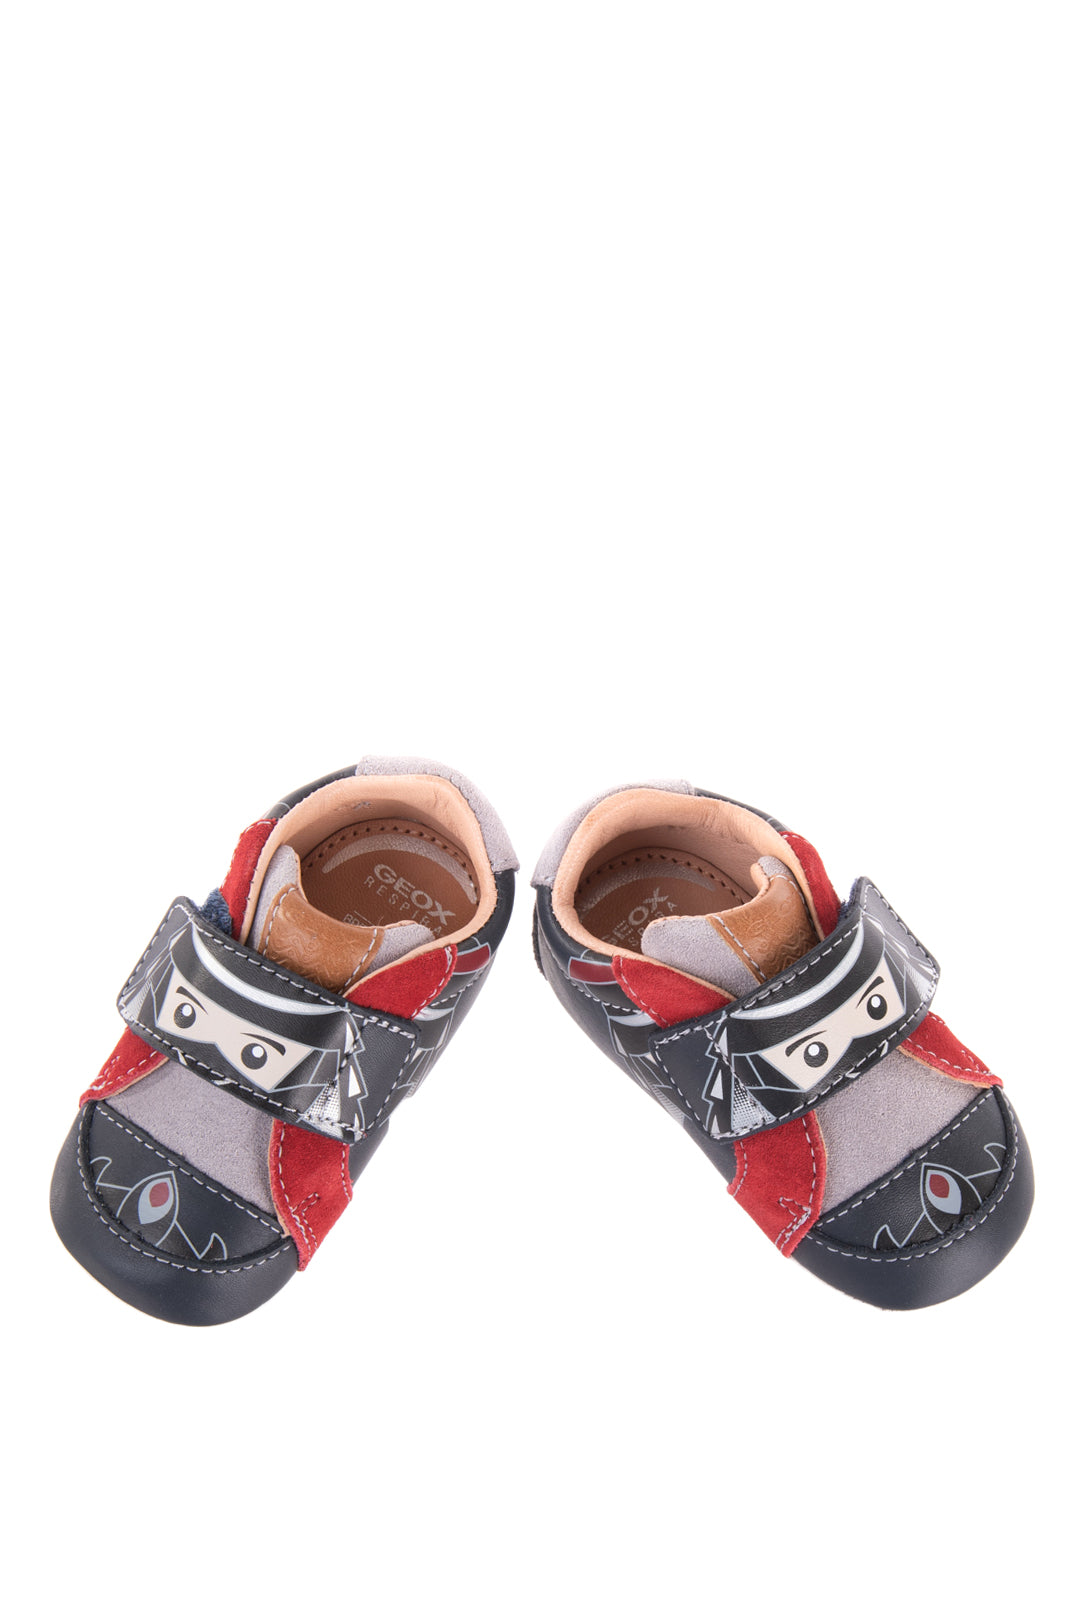 GEOX RESPIRA Baby Leather Sneakers Size 18 UK 2.5 US 3 Antibacterial Ninjago gallery main photo